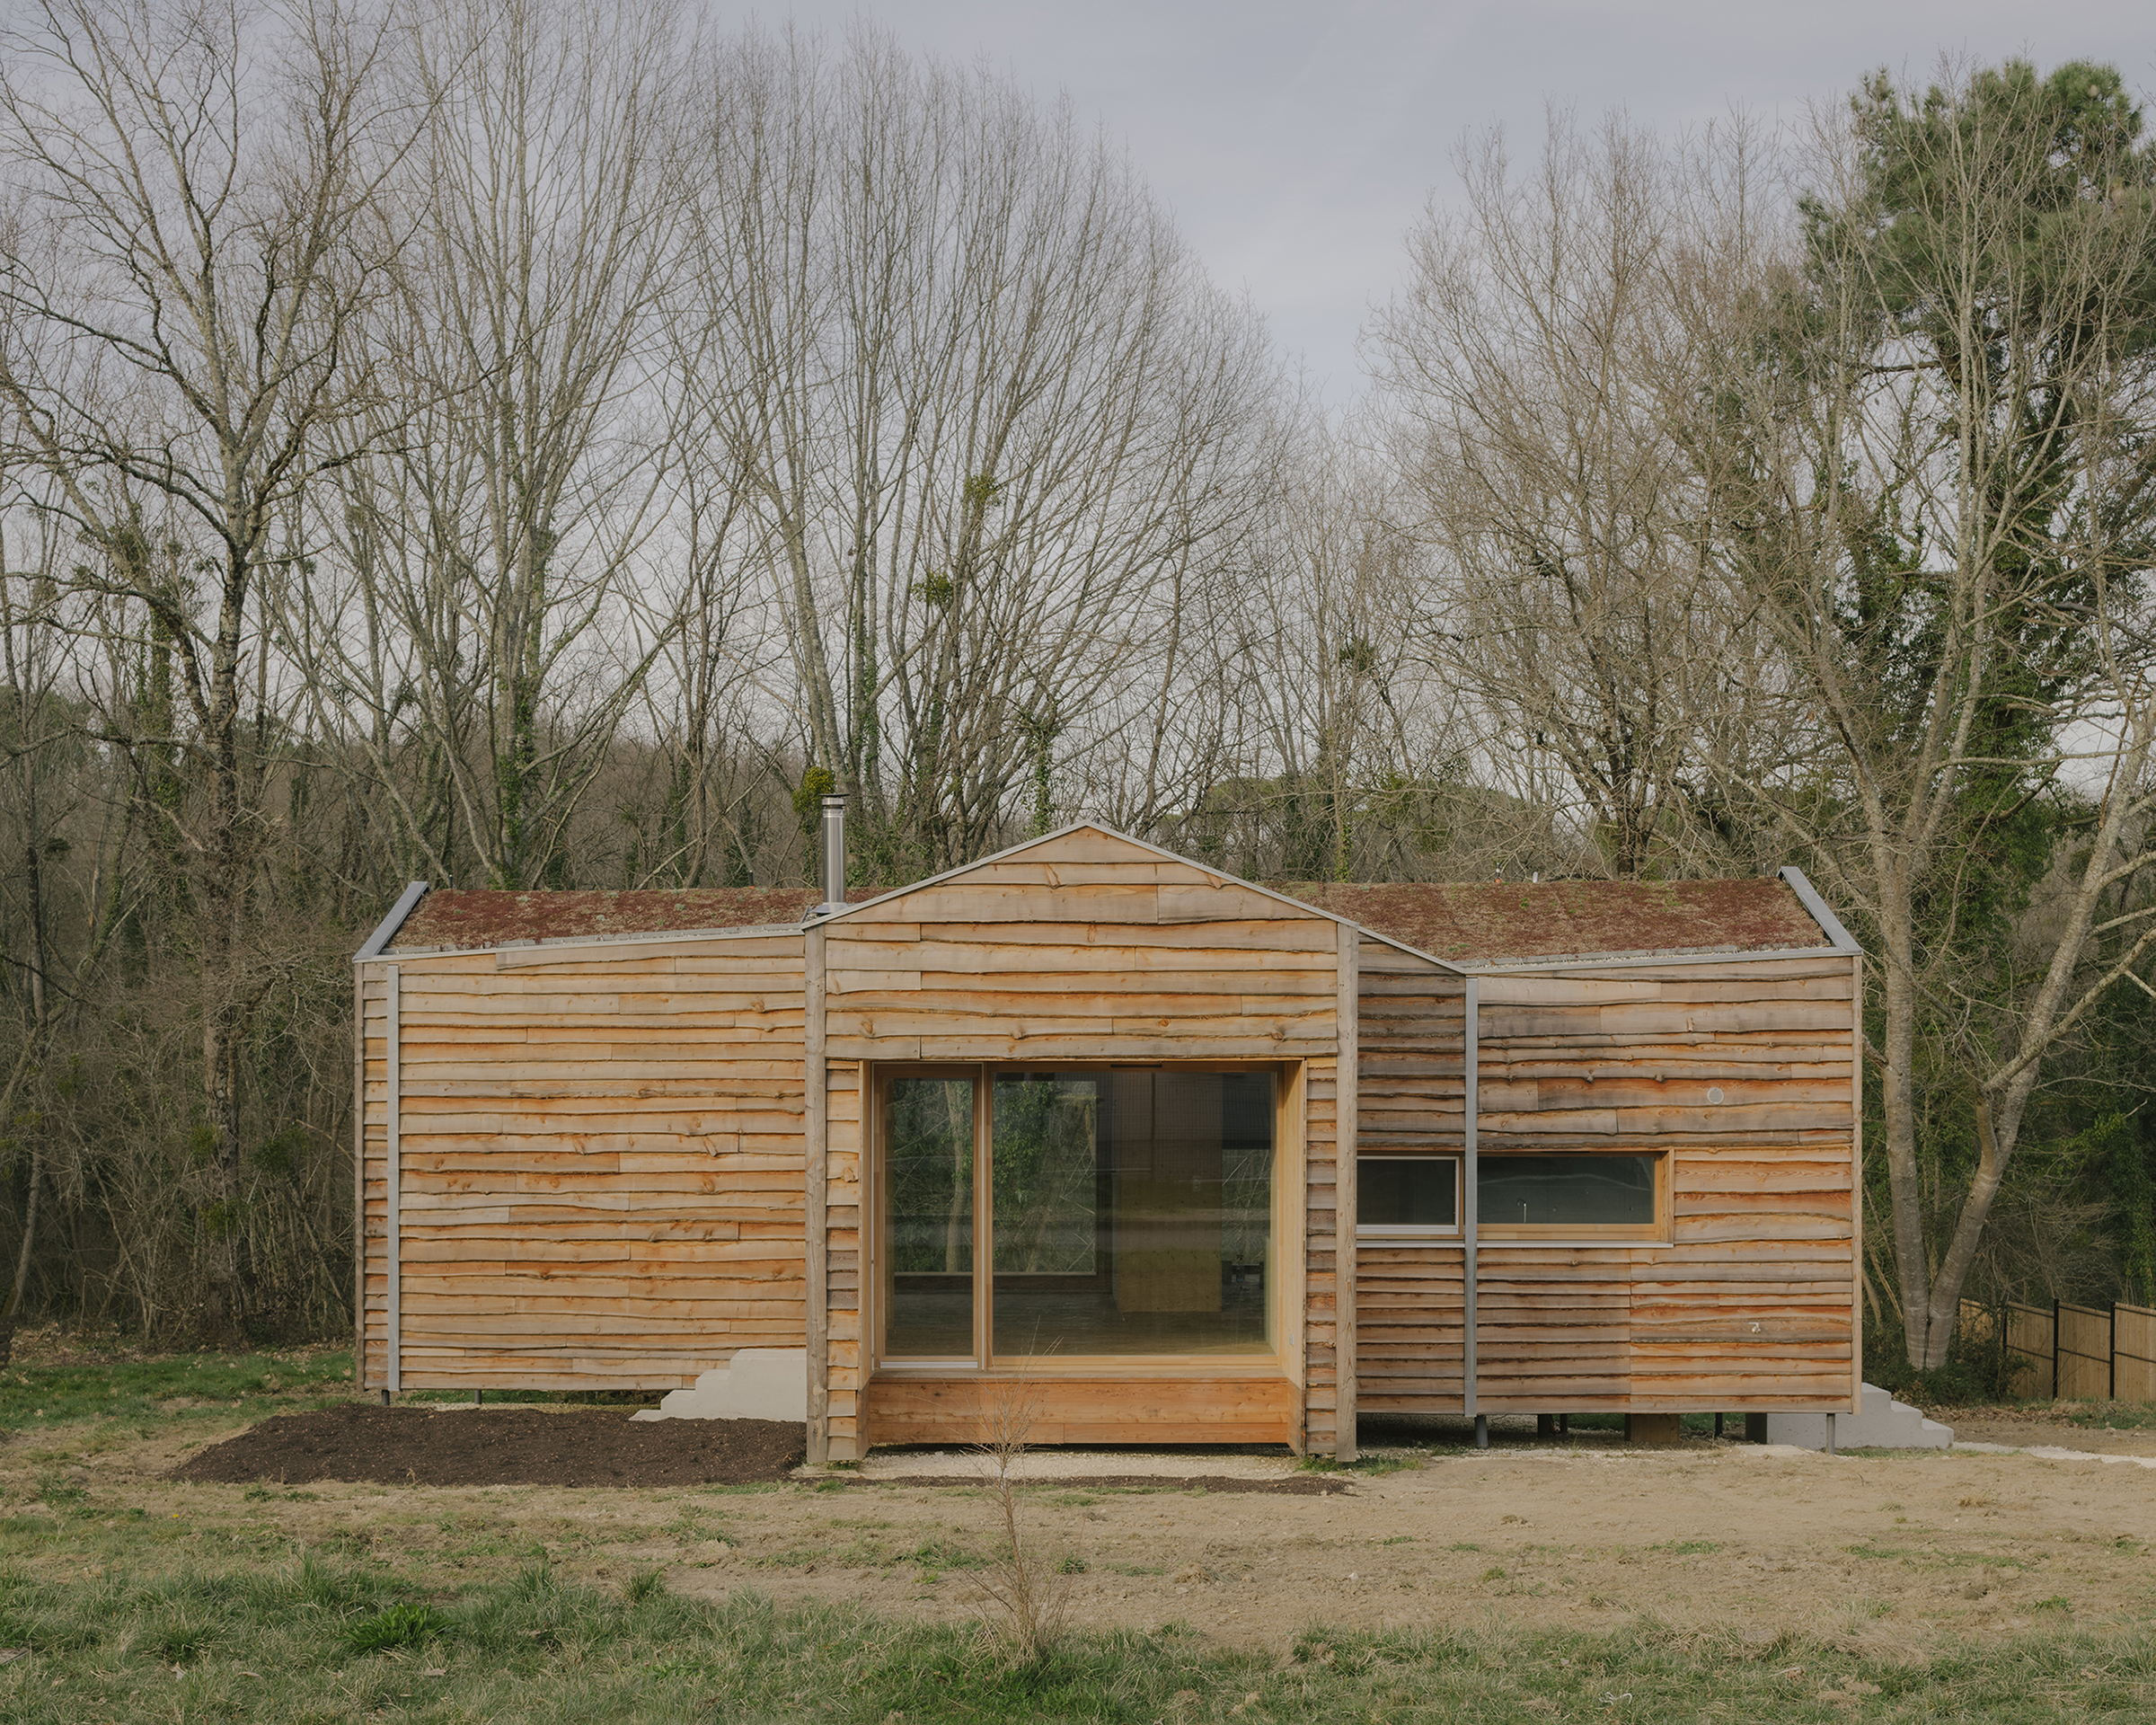  onSITE architecture_Maison(ou)VerteRurale / Maxime Verret